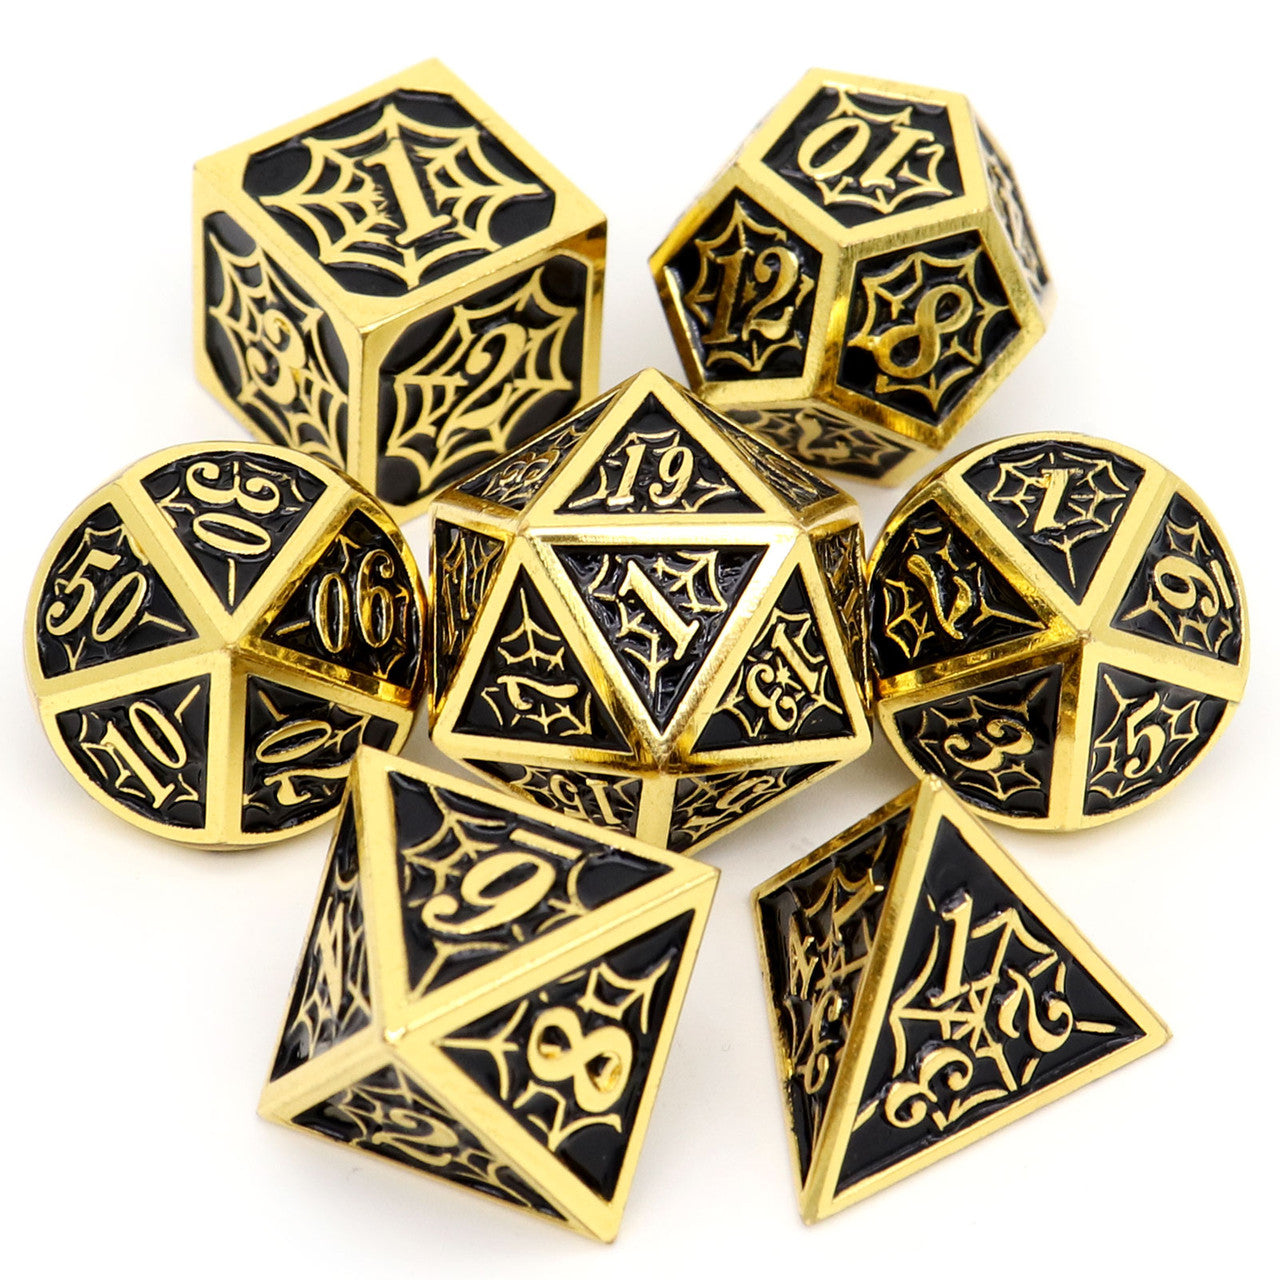 gold black metal dice, gold metal dice, the net dice, net dice, spider dice, black dice, haxtec dice